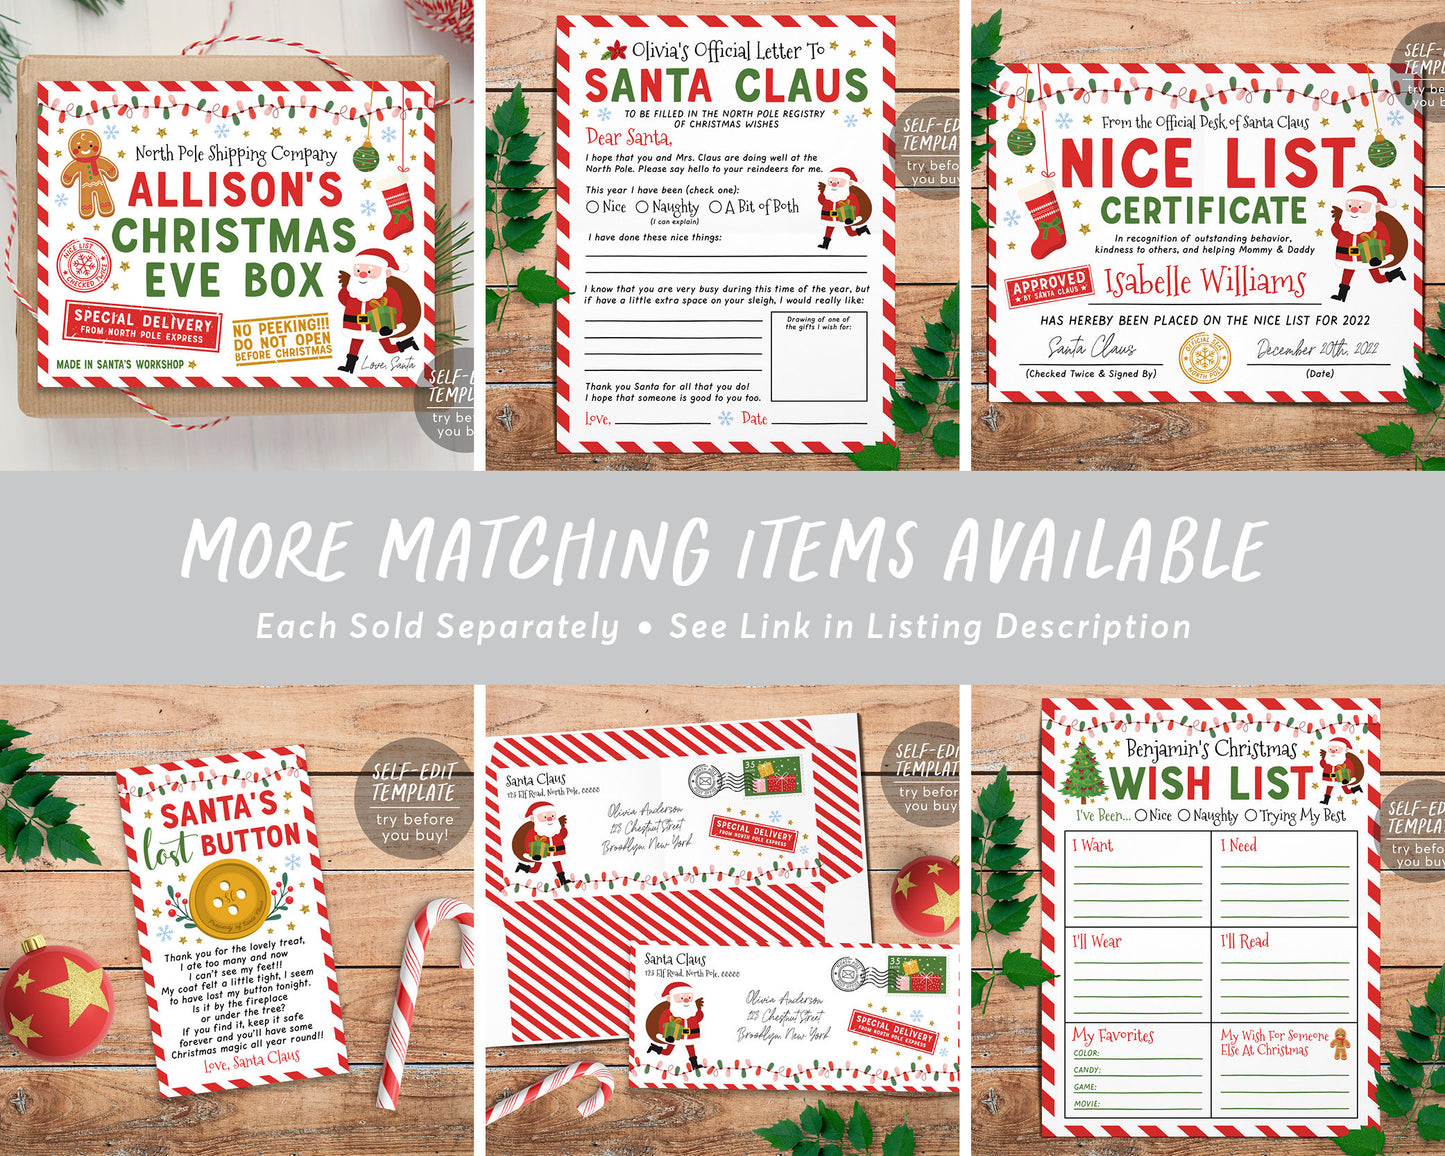 Secret Santa Coworker Office Christmas Game Editable Template, Santa Gift Swap Activity For Company Staff Printable Santa Sign Instructions